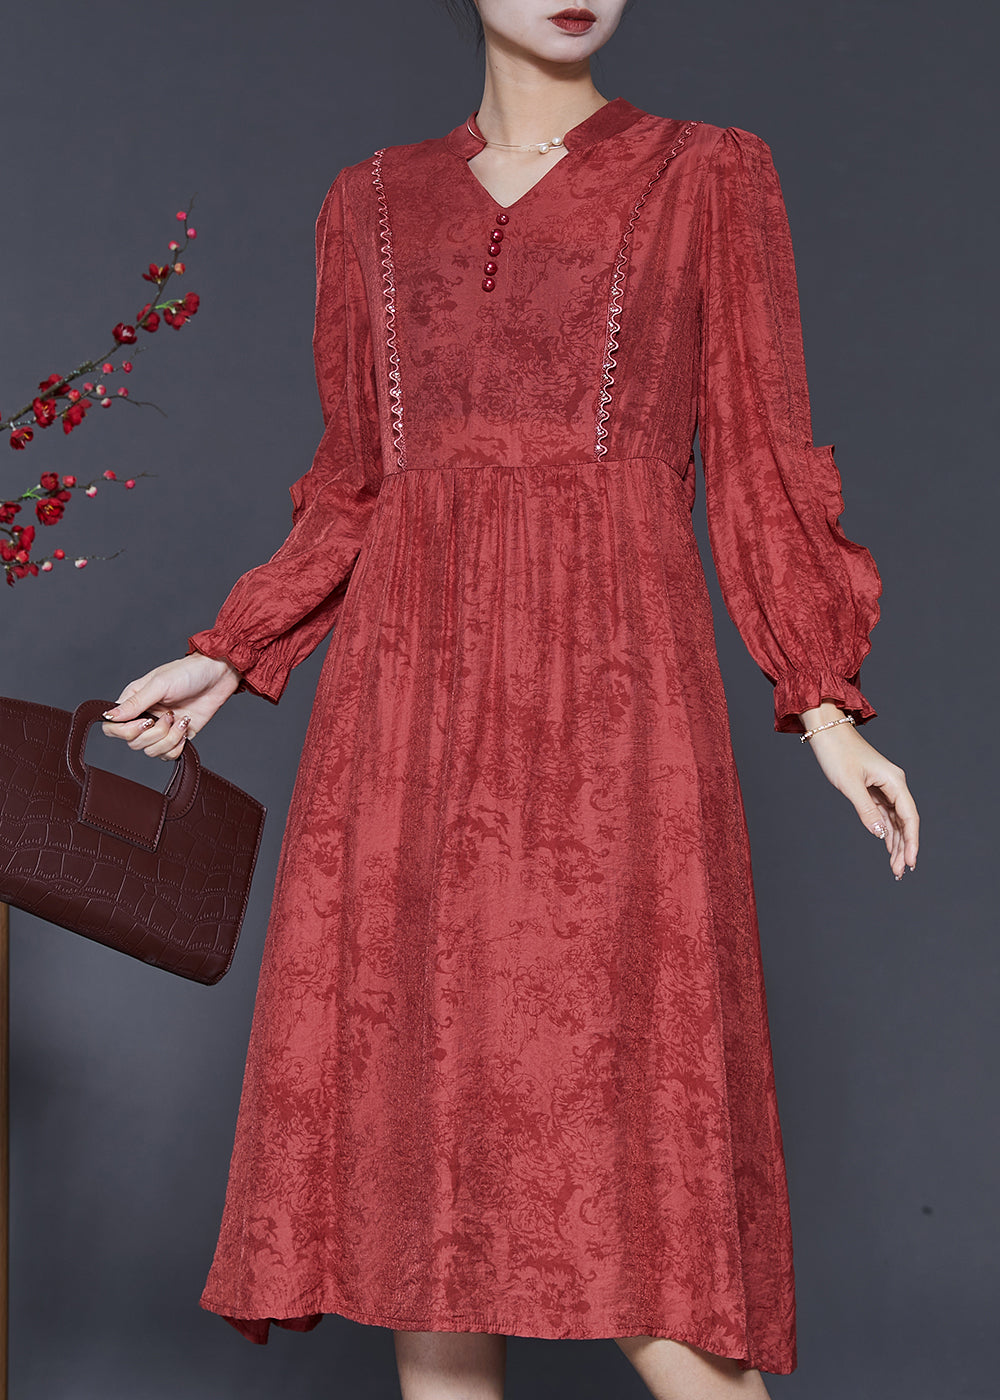 Elegant Red Ruffled Jacquard Cotton Robe Dresses Spring